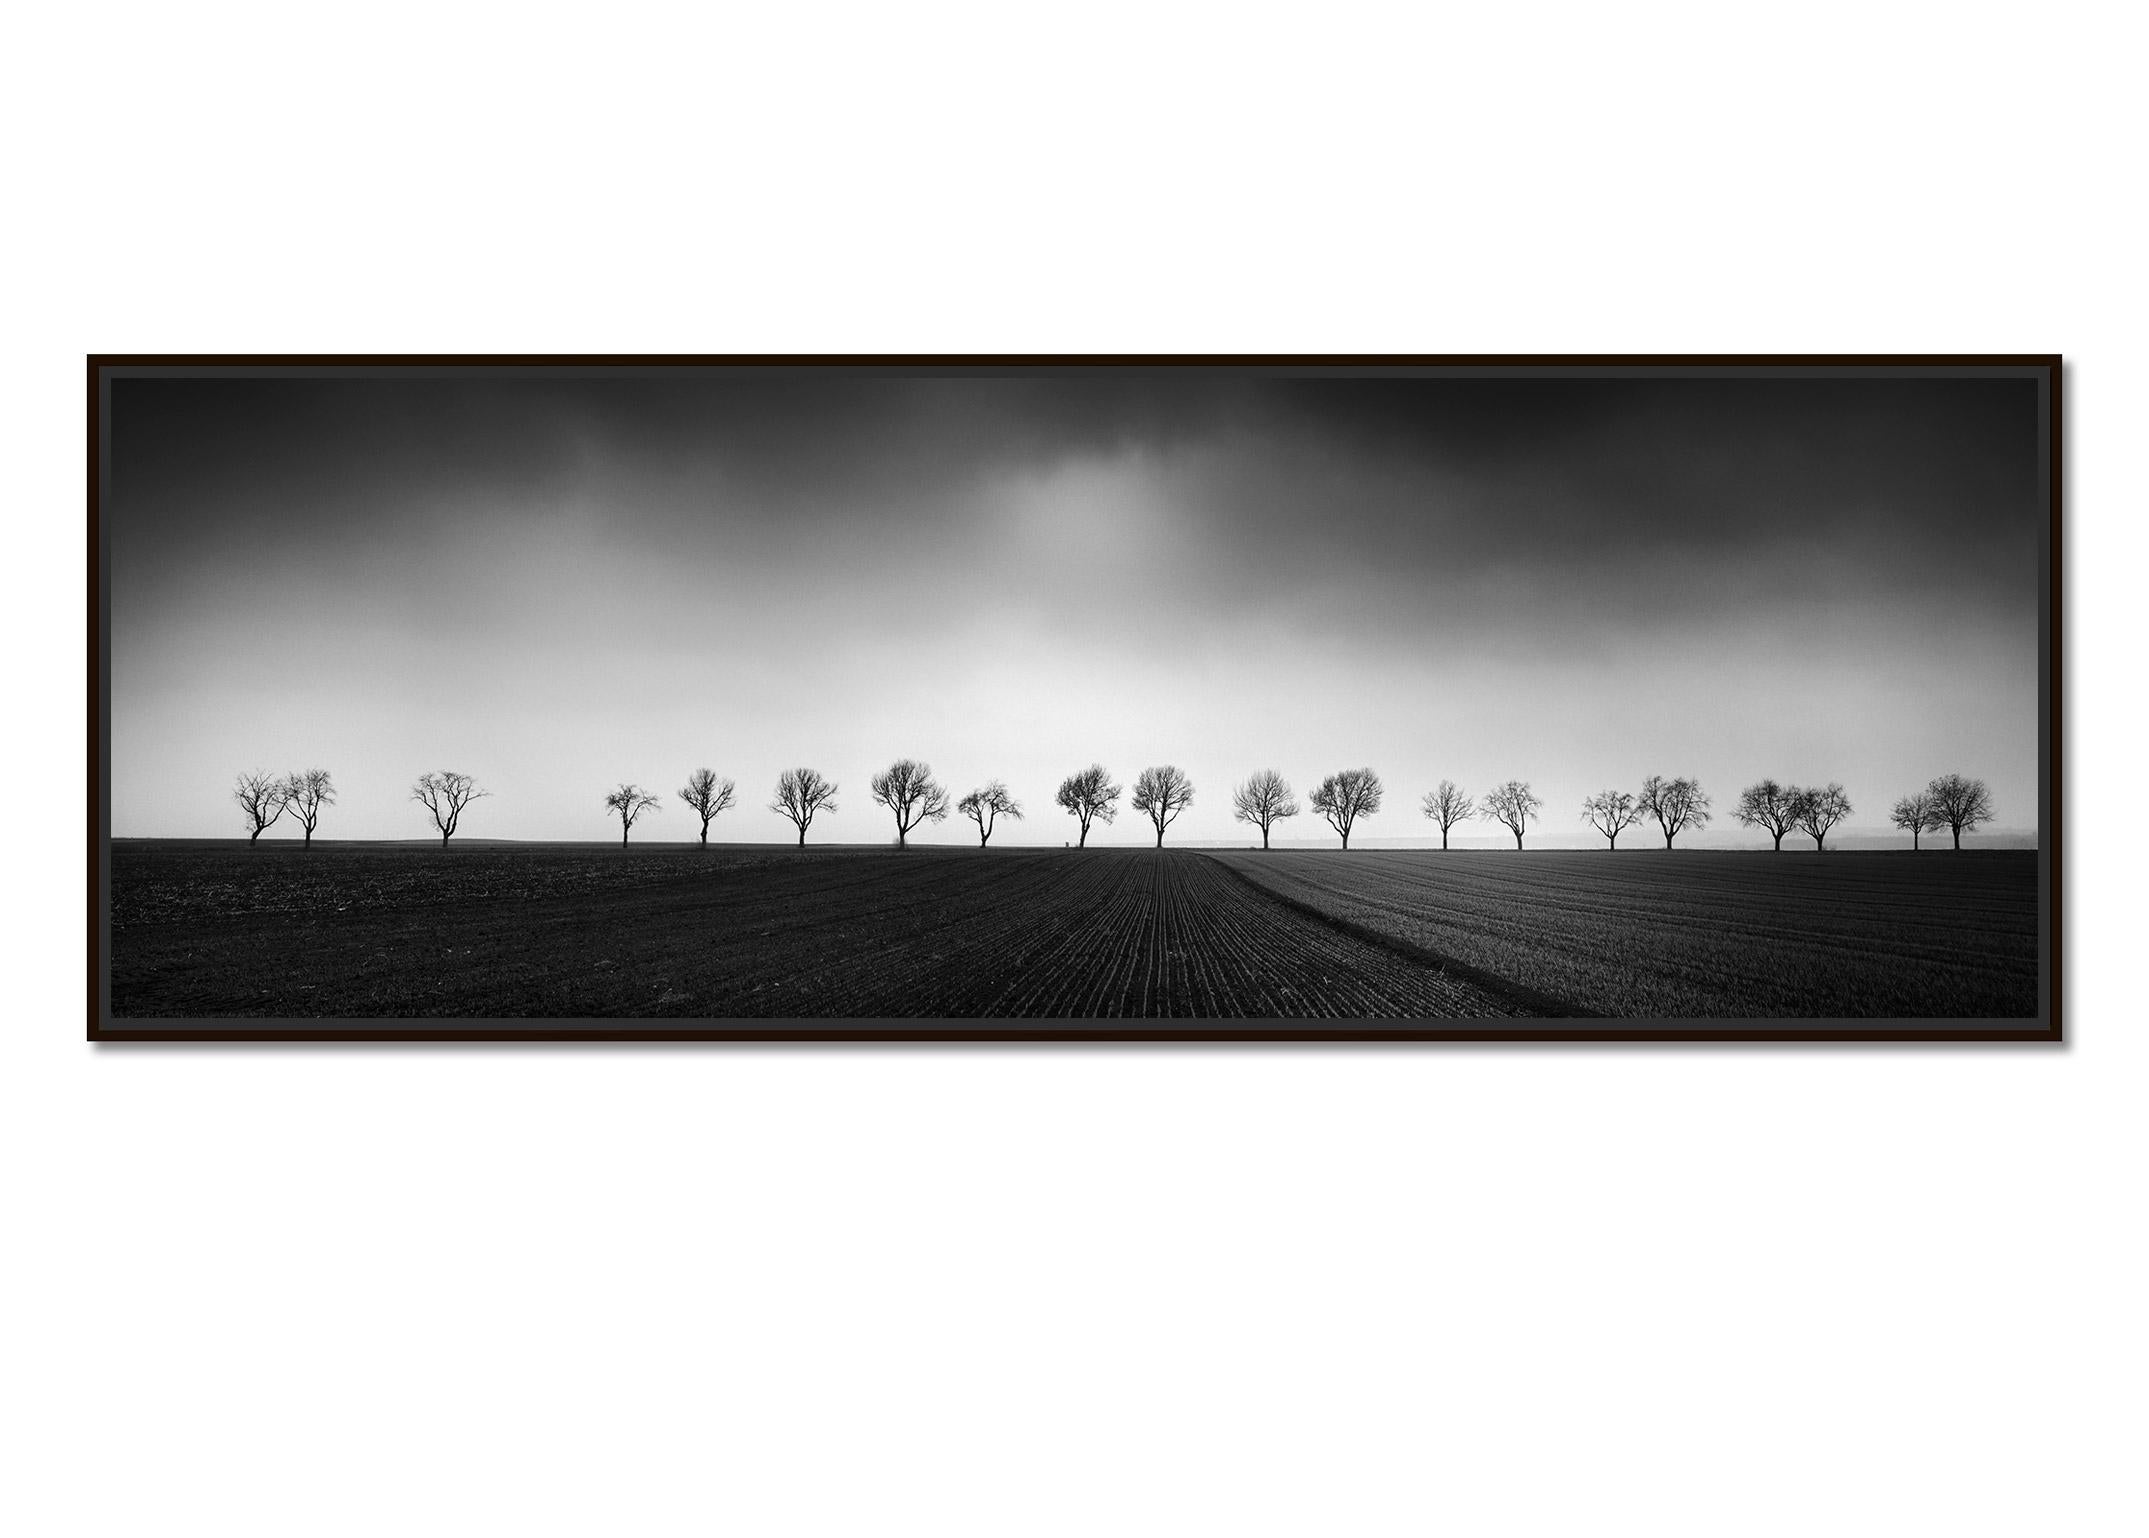 Twenty cherry Trees avenue cornfield black white panorama landscape photography - Photograph by Gerald Berghammer